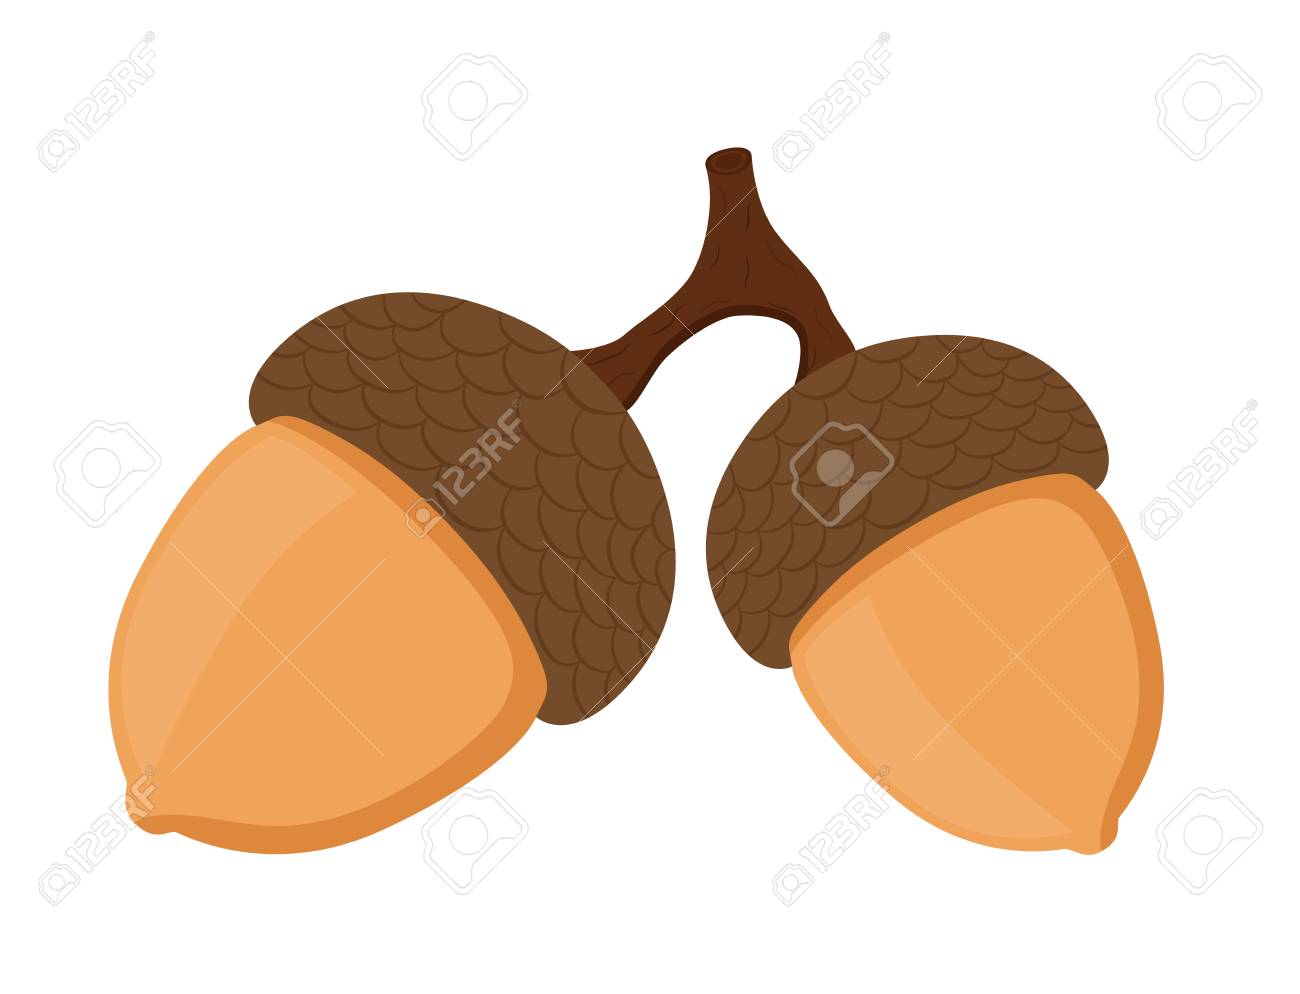 acorn clipart gland